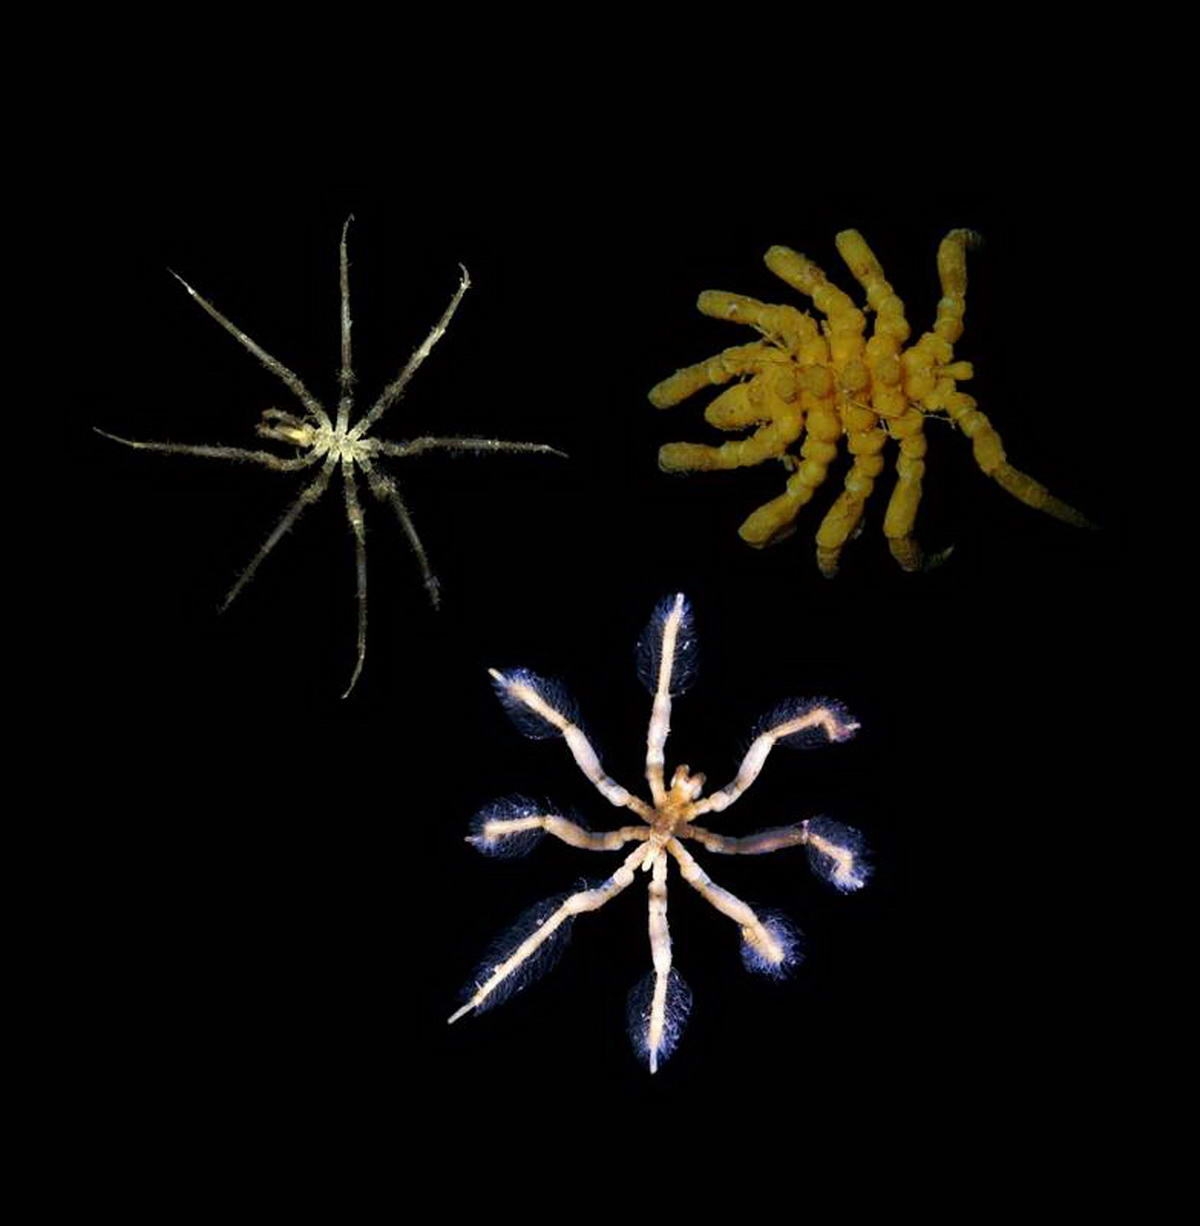 05_csm_Sea_spiders_9b7366febf_klein (c) Sea spiders (c) Griffiths, Huw J.